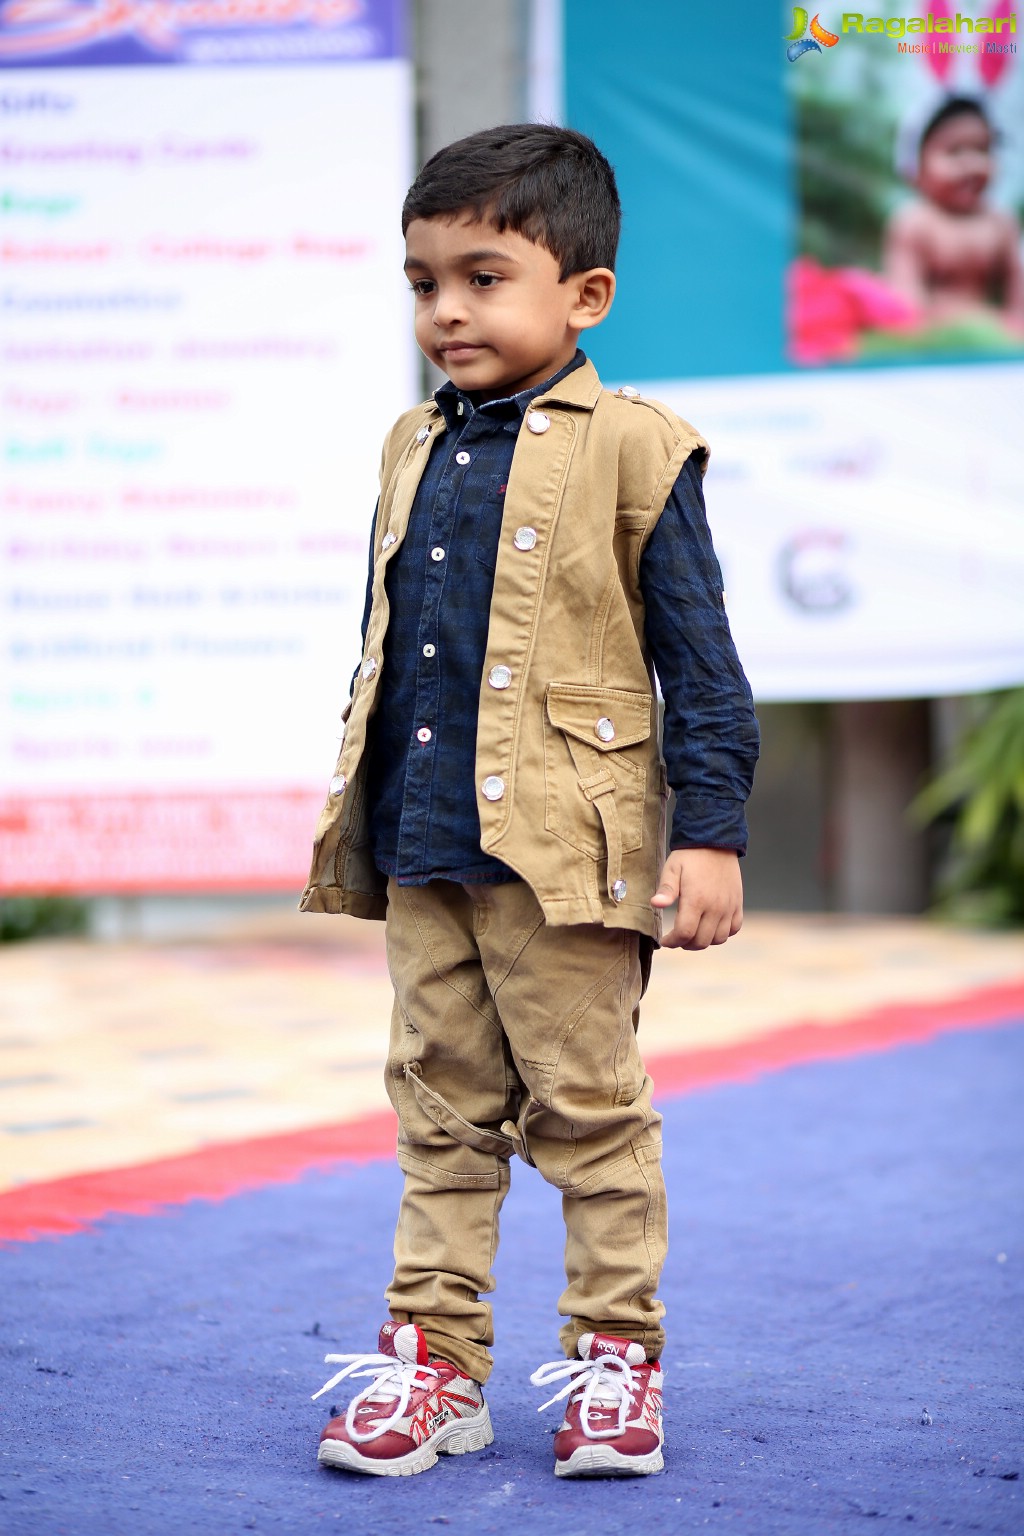 Saritha Krishna's Telangana Kids Fashion Hunt at Ocimum International School, Bowenpally, Hyderabad